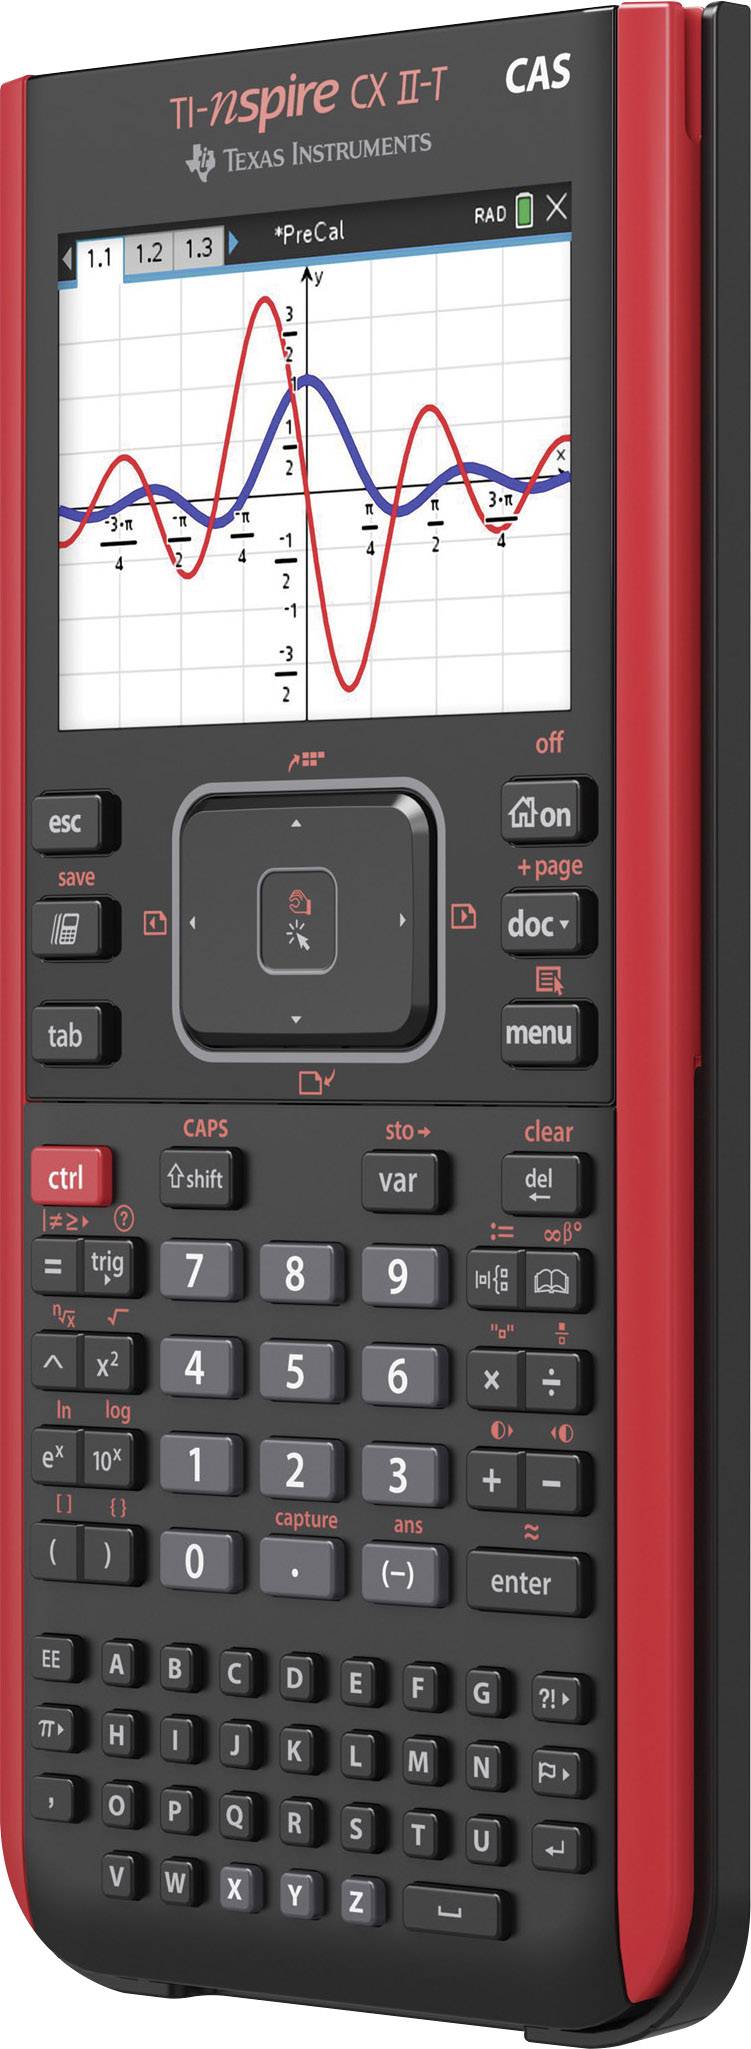 Texas Instruments TI-NSpire™ CX II-T CAS Graphing calculator Black  rechargeable (W x H x D) 100 x 23 x 200 mm | Conrad.com